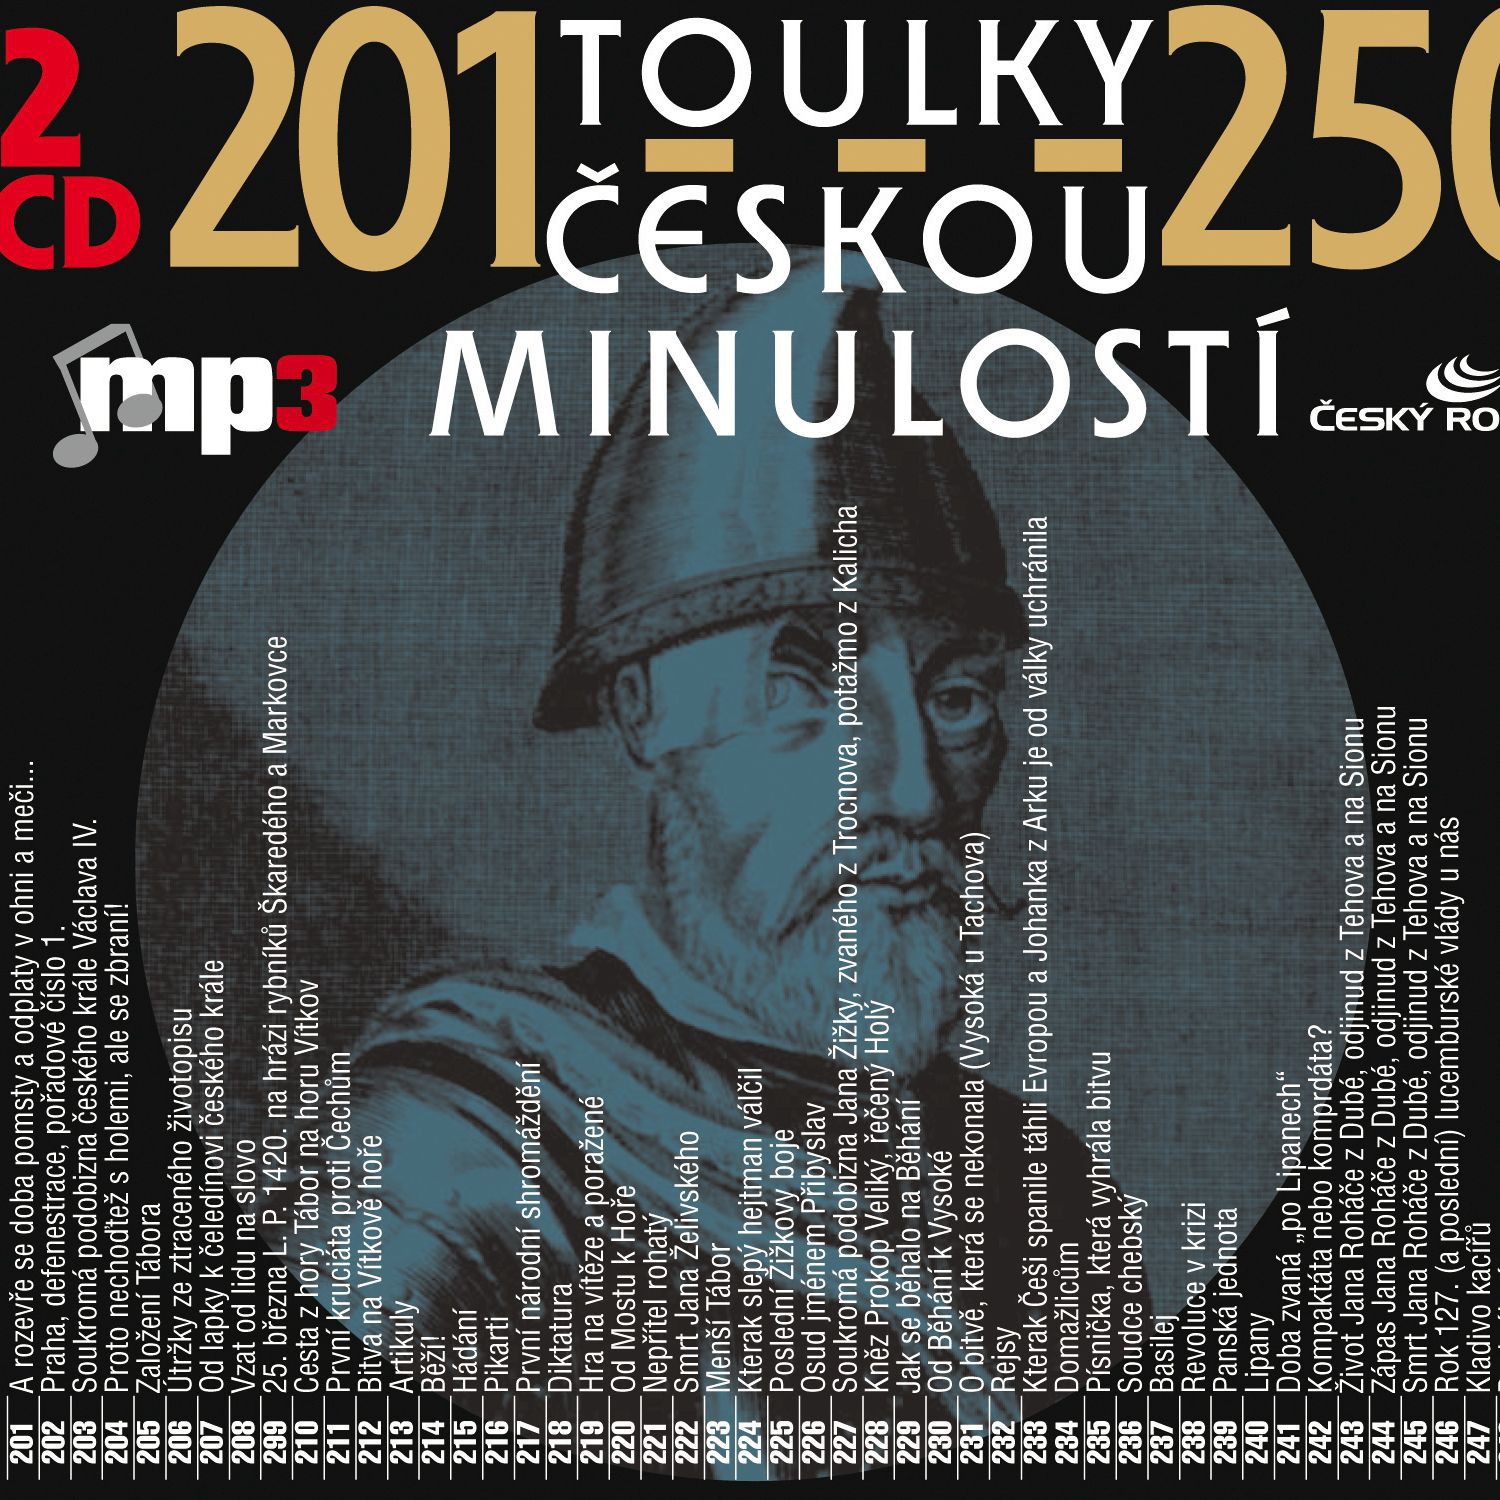 CD Shop - VARIOUS TOULKY CESKOU MINULOSTI 201-250 (MP3-